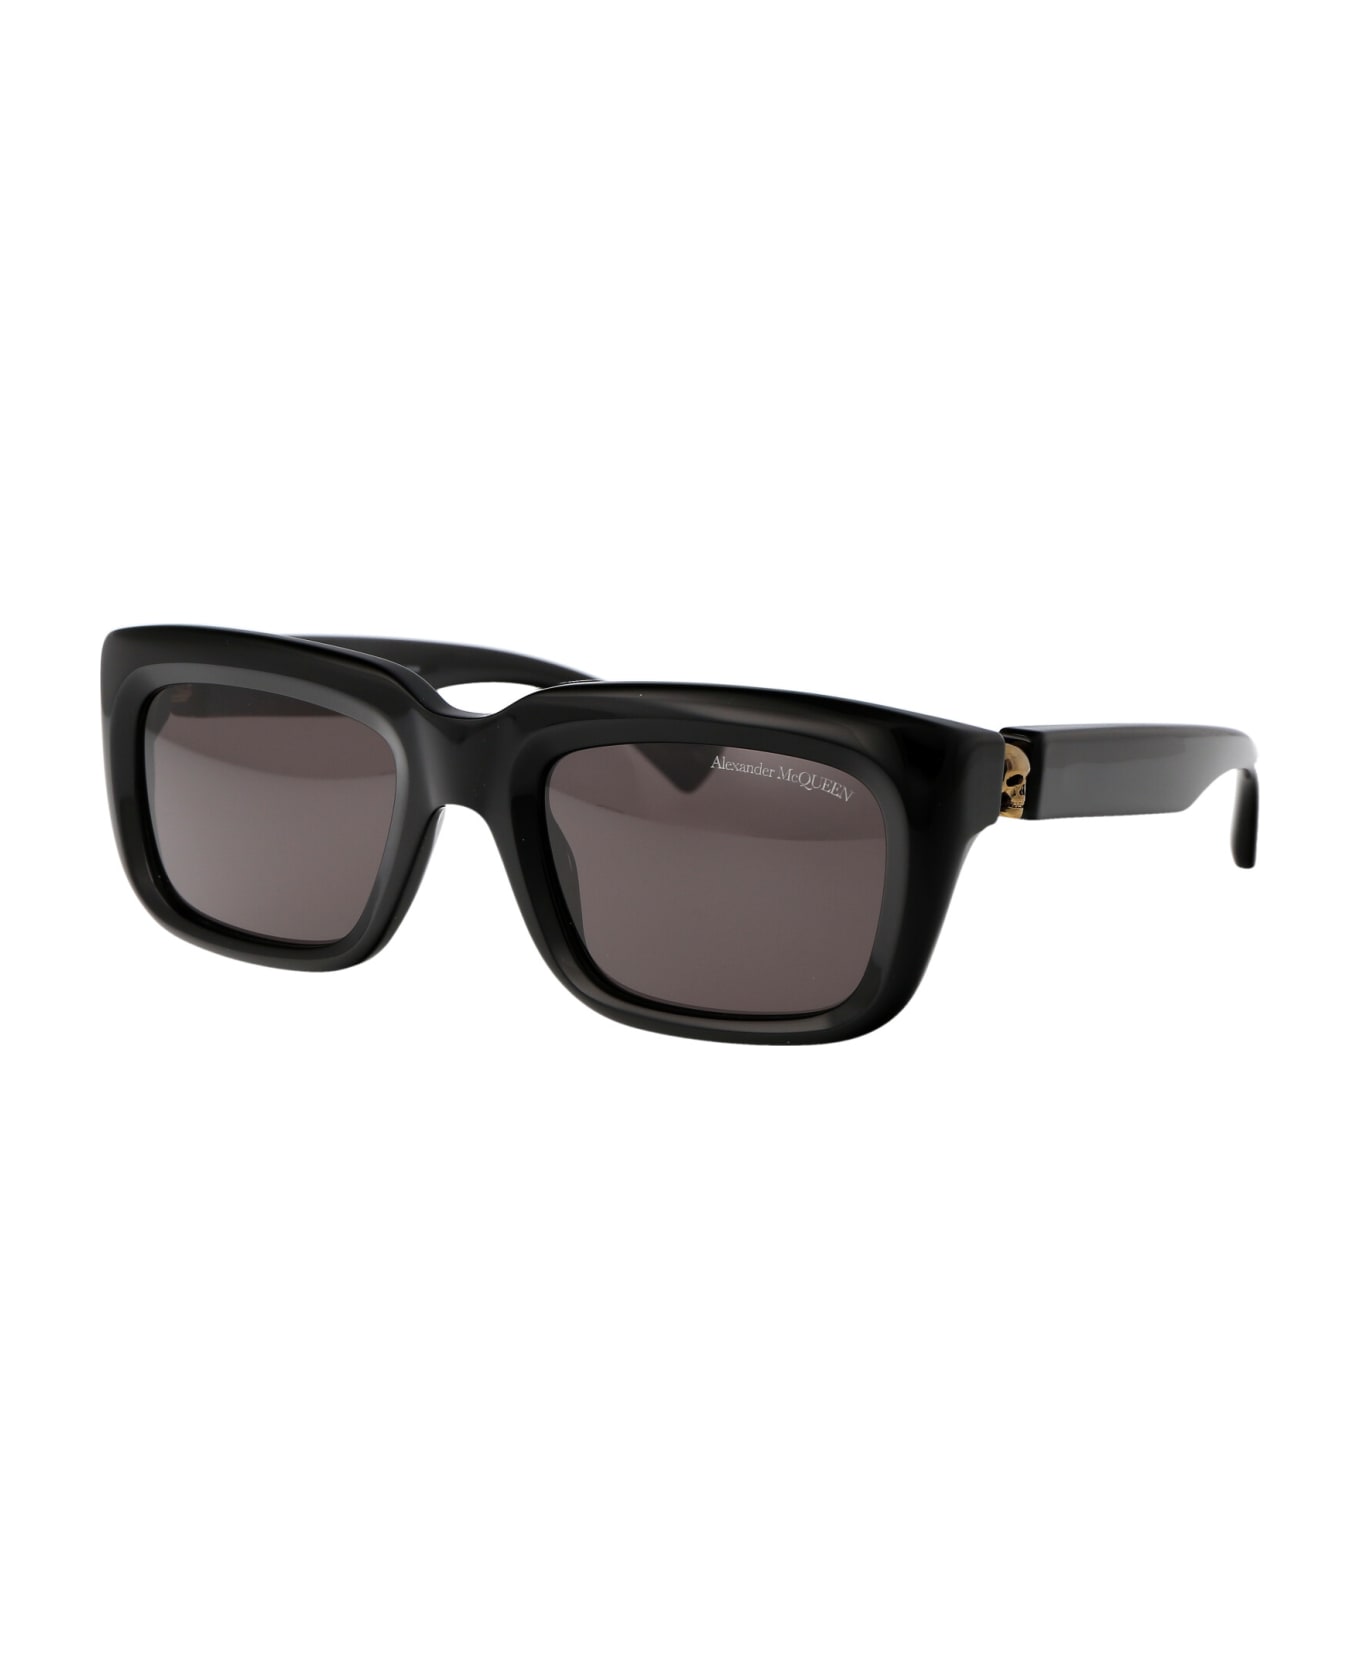 Alexander McQueen Eyewear Am0431s Sunglasses - 001 BLACK BLACK GREY